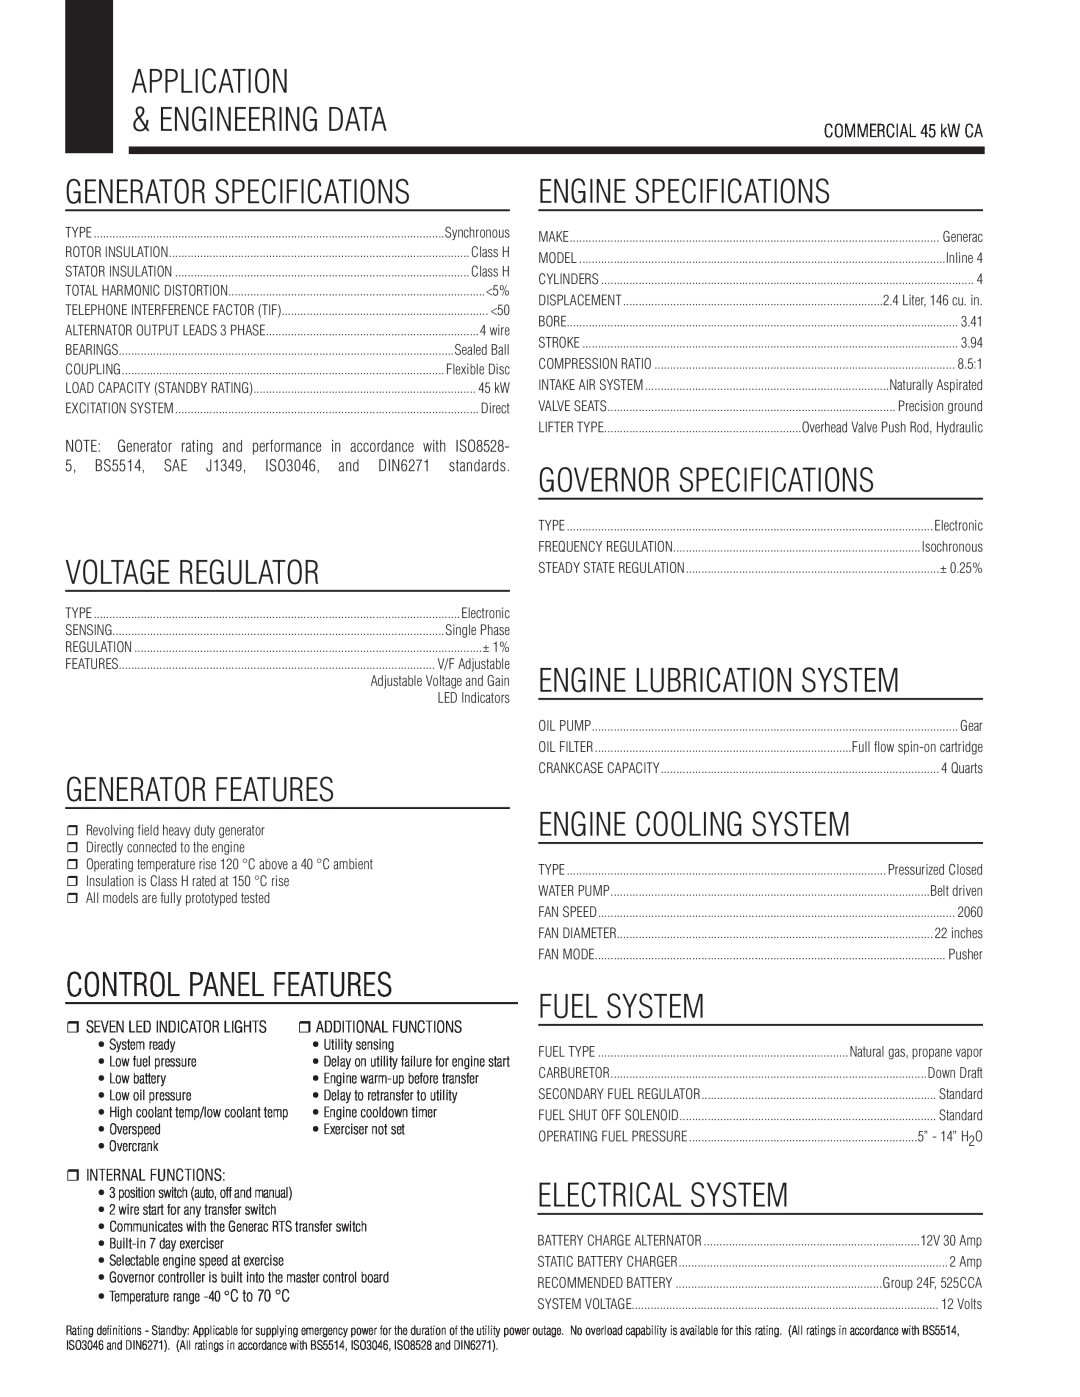 Generac Power Systems QT04524 manual Application & Engineering Data 